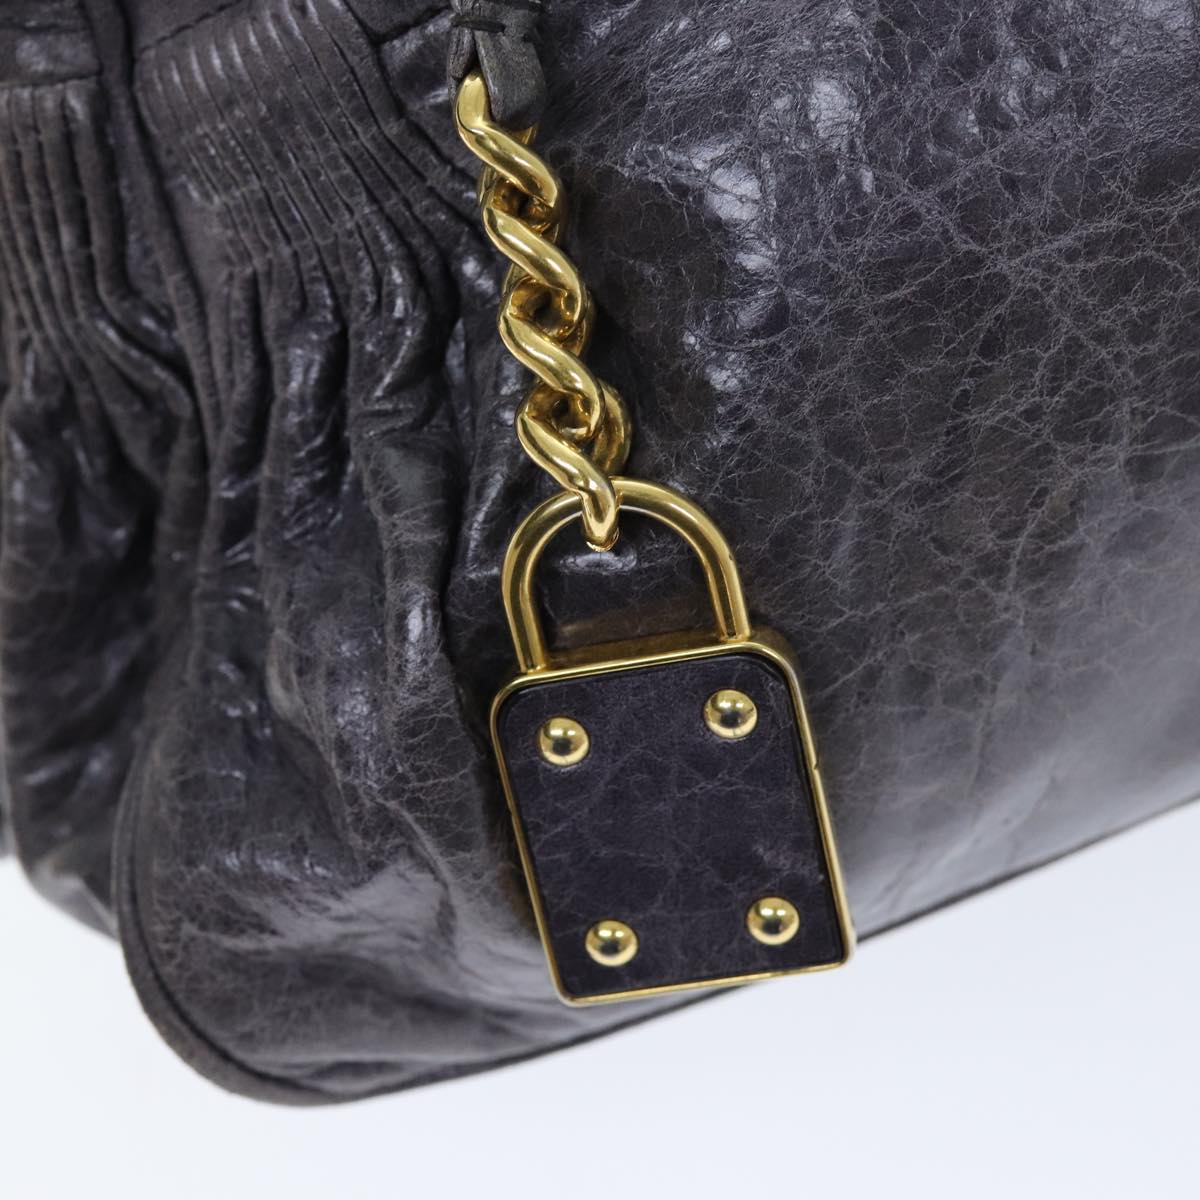 Miu Miu Hand Bag Leather 2way Shoulder Bag Purple Auth ki4427